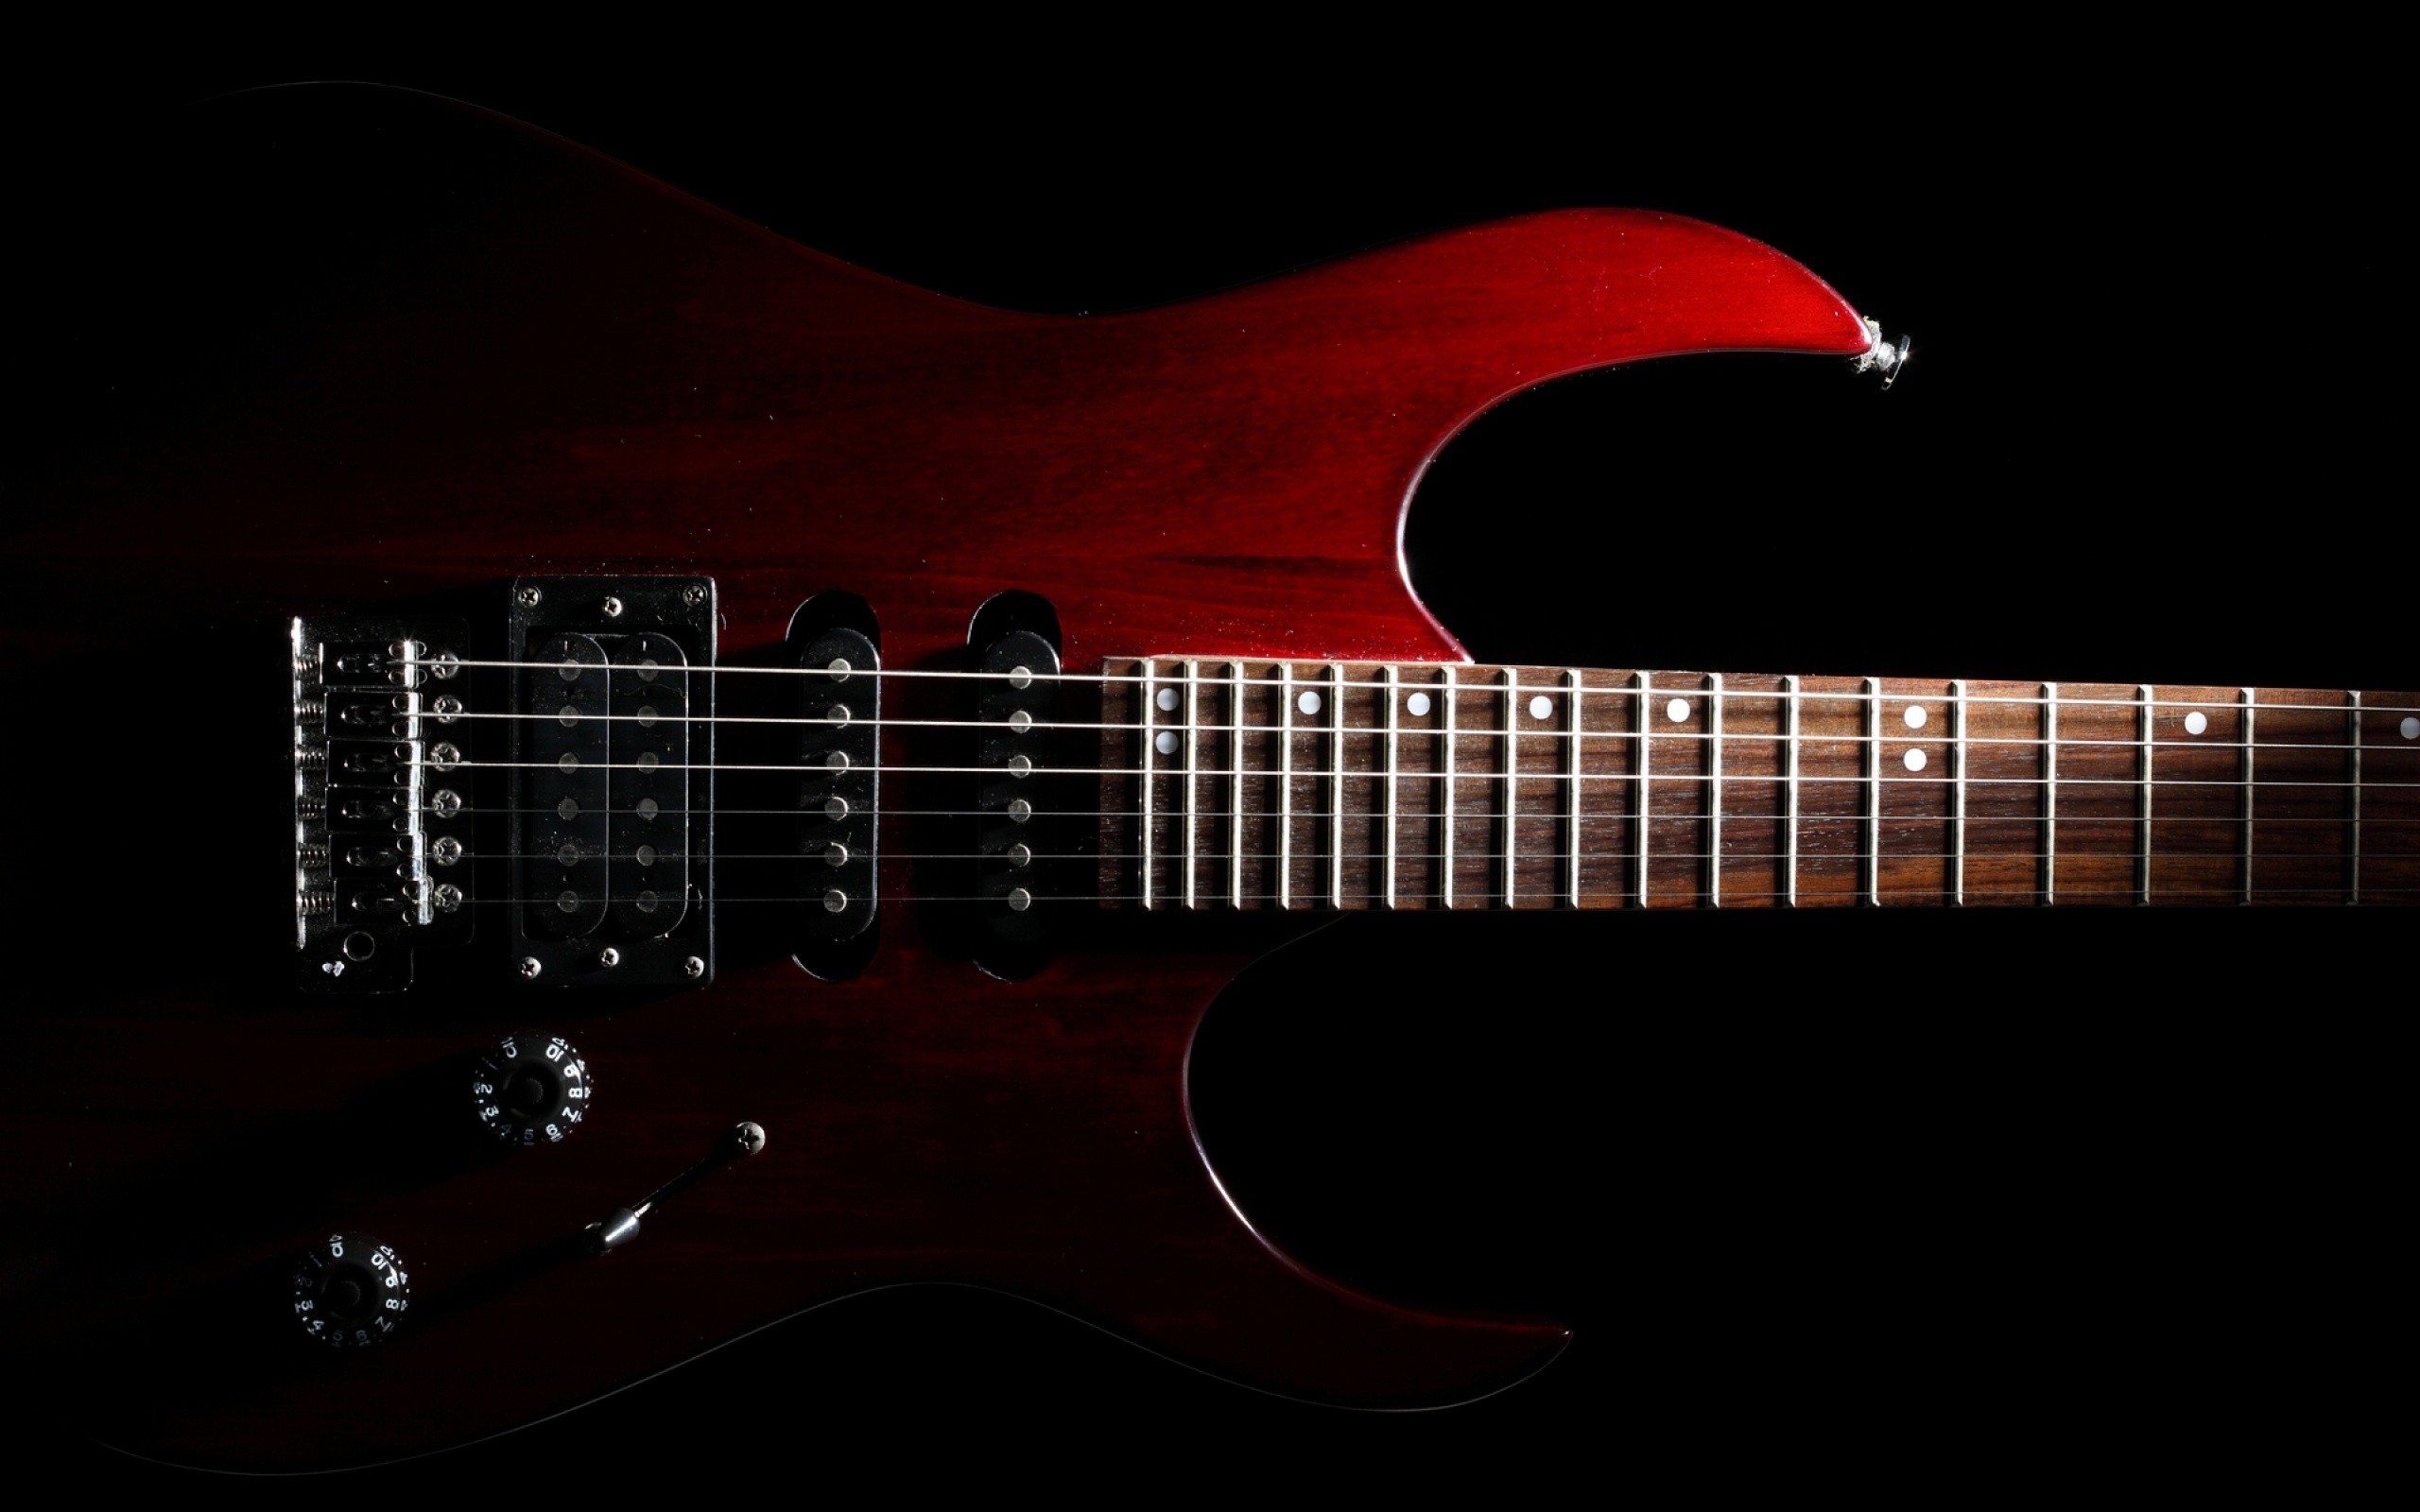 2560x1600 Red Electric Guitar Wallpaper - smokescreen ...